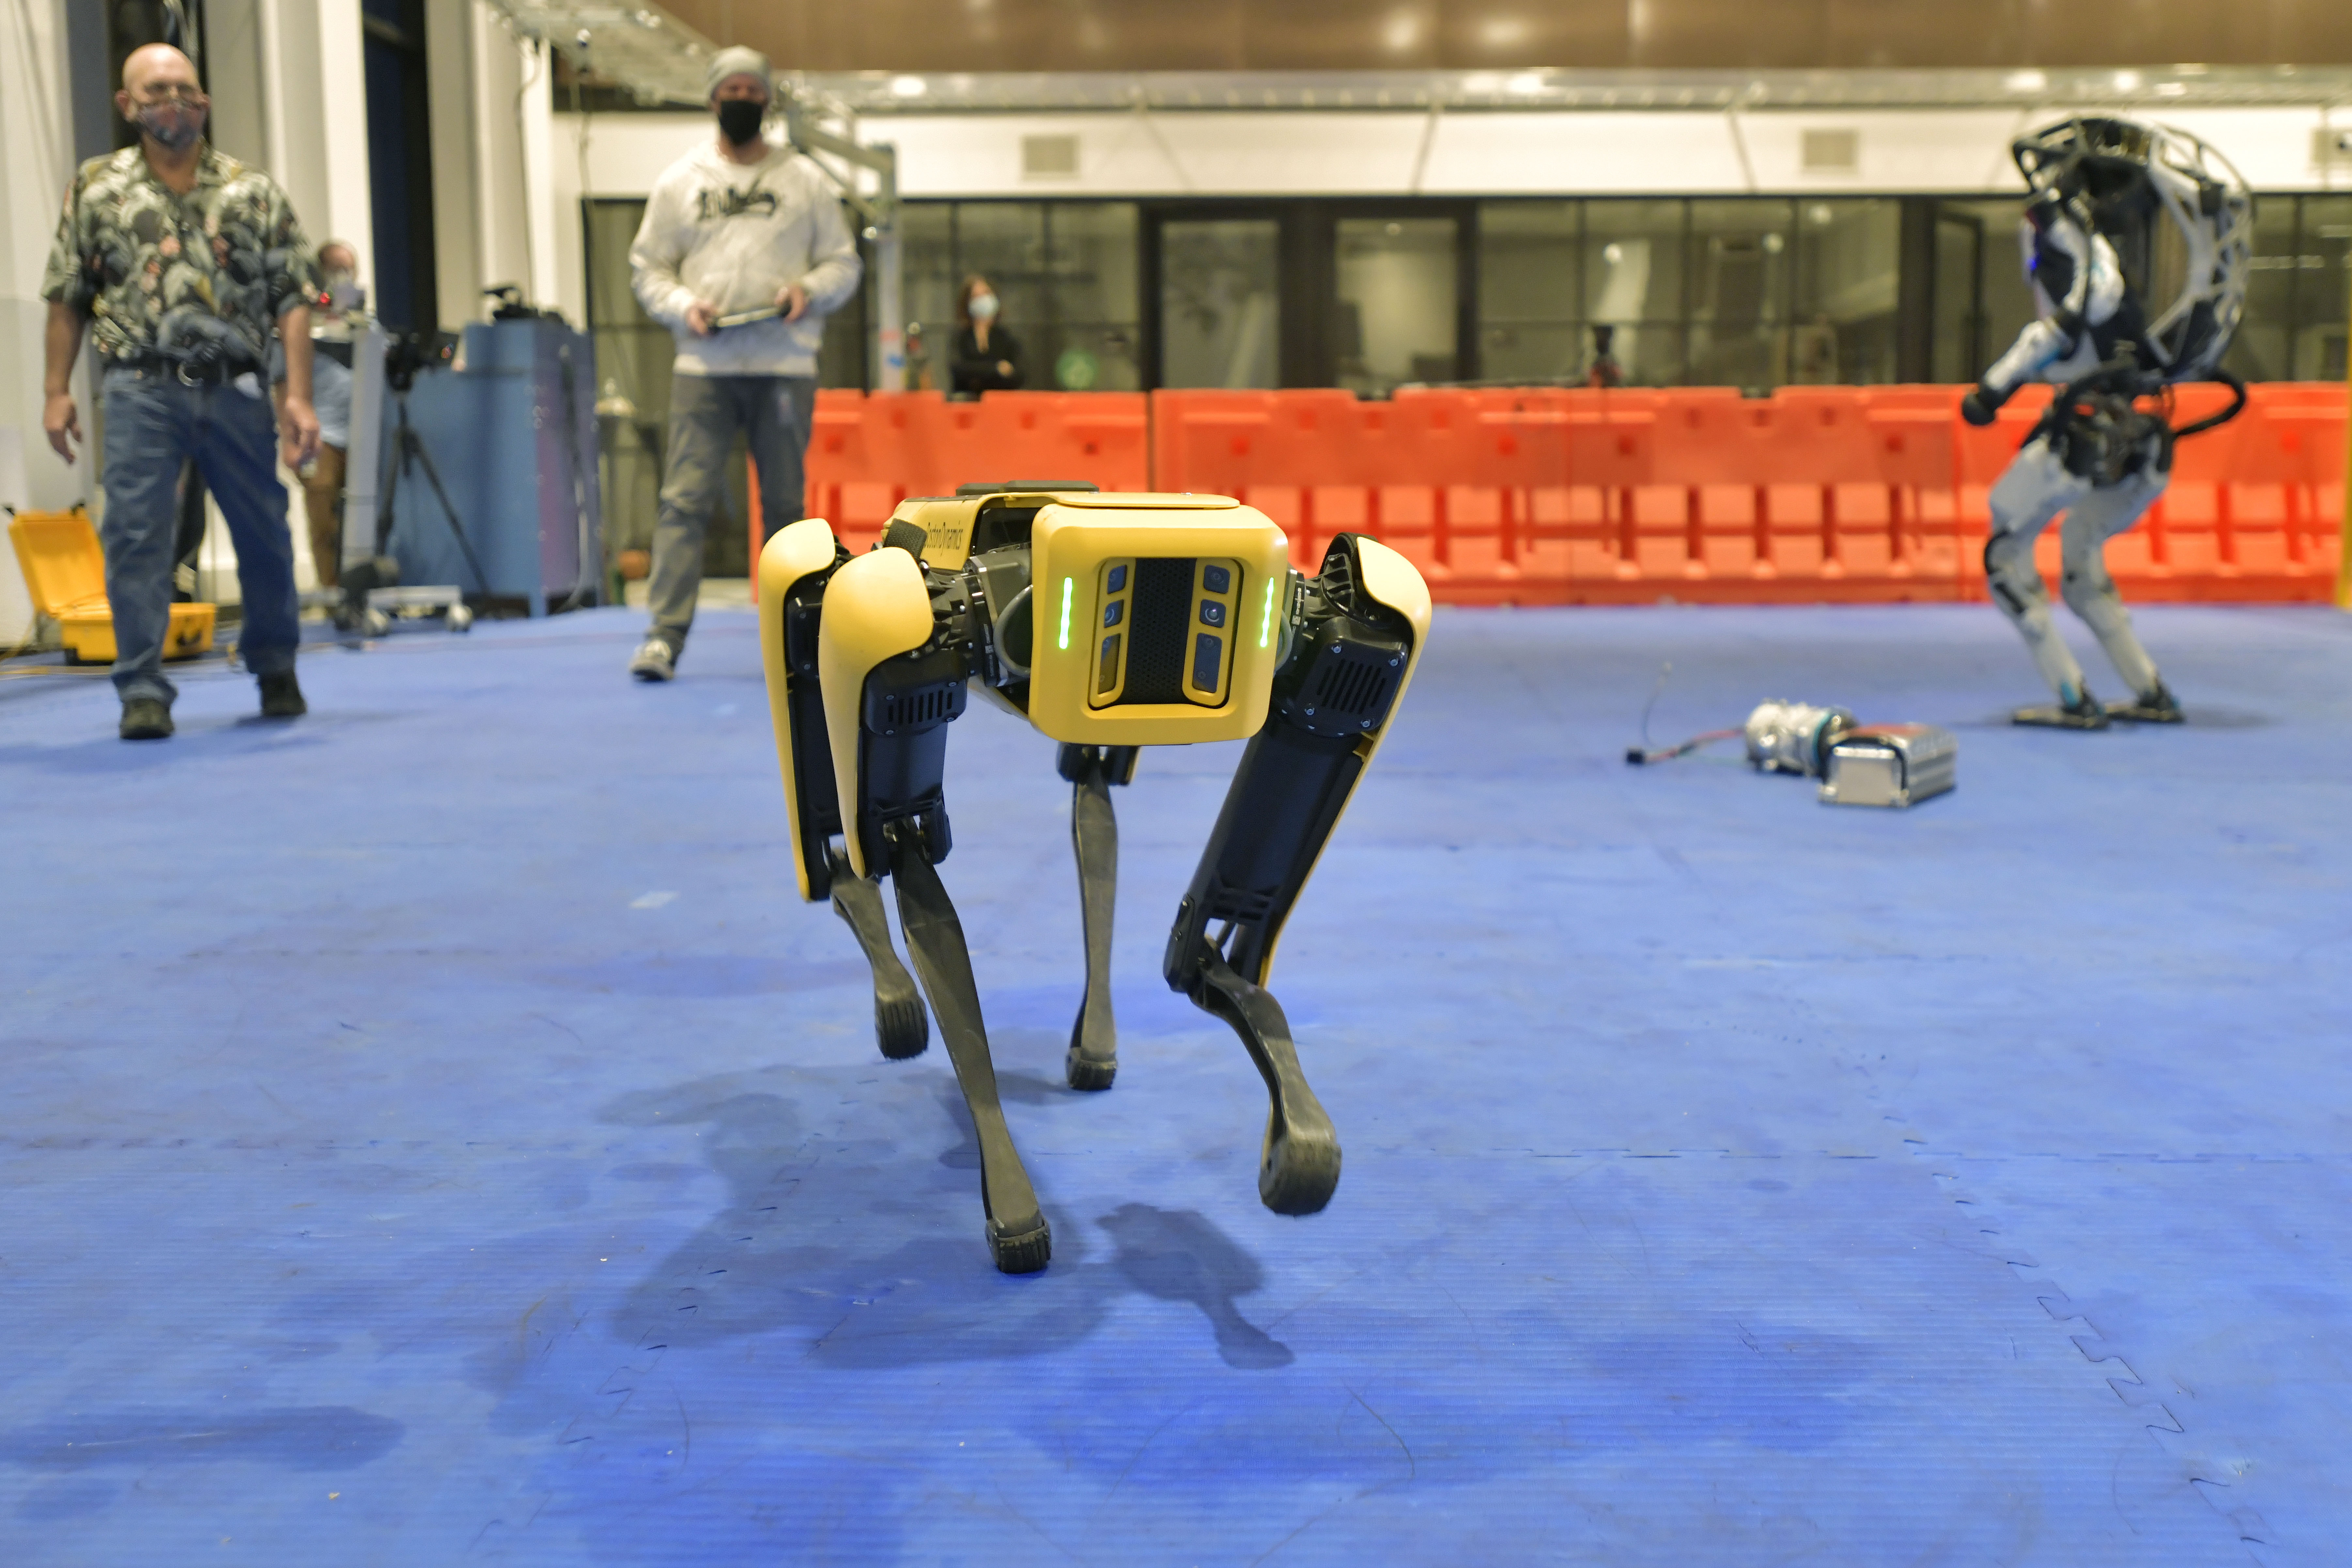 Boston Dynamics and agree to ban weaponized robots - The Boston Globe